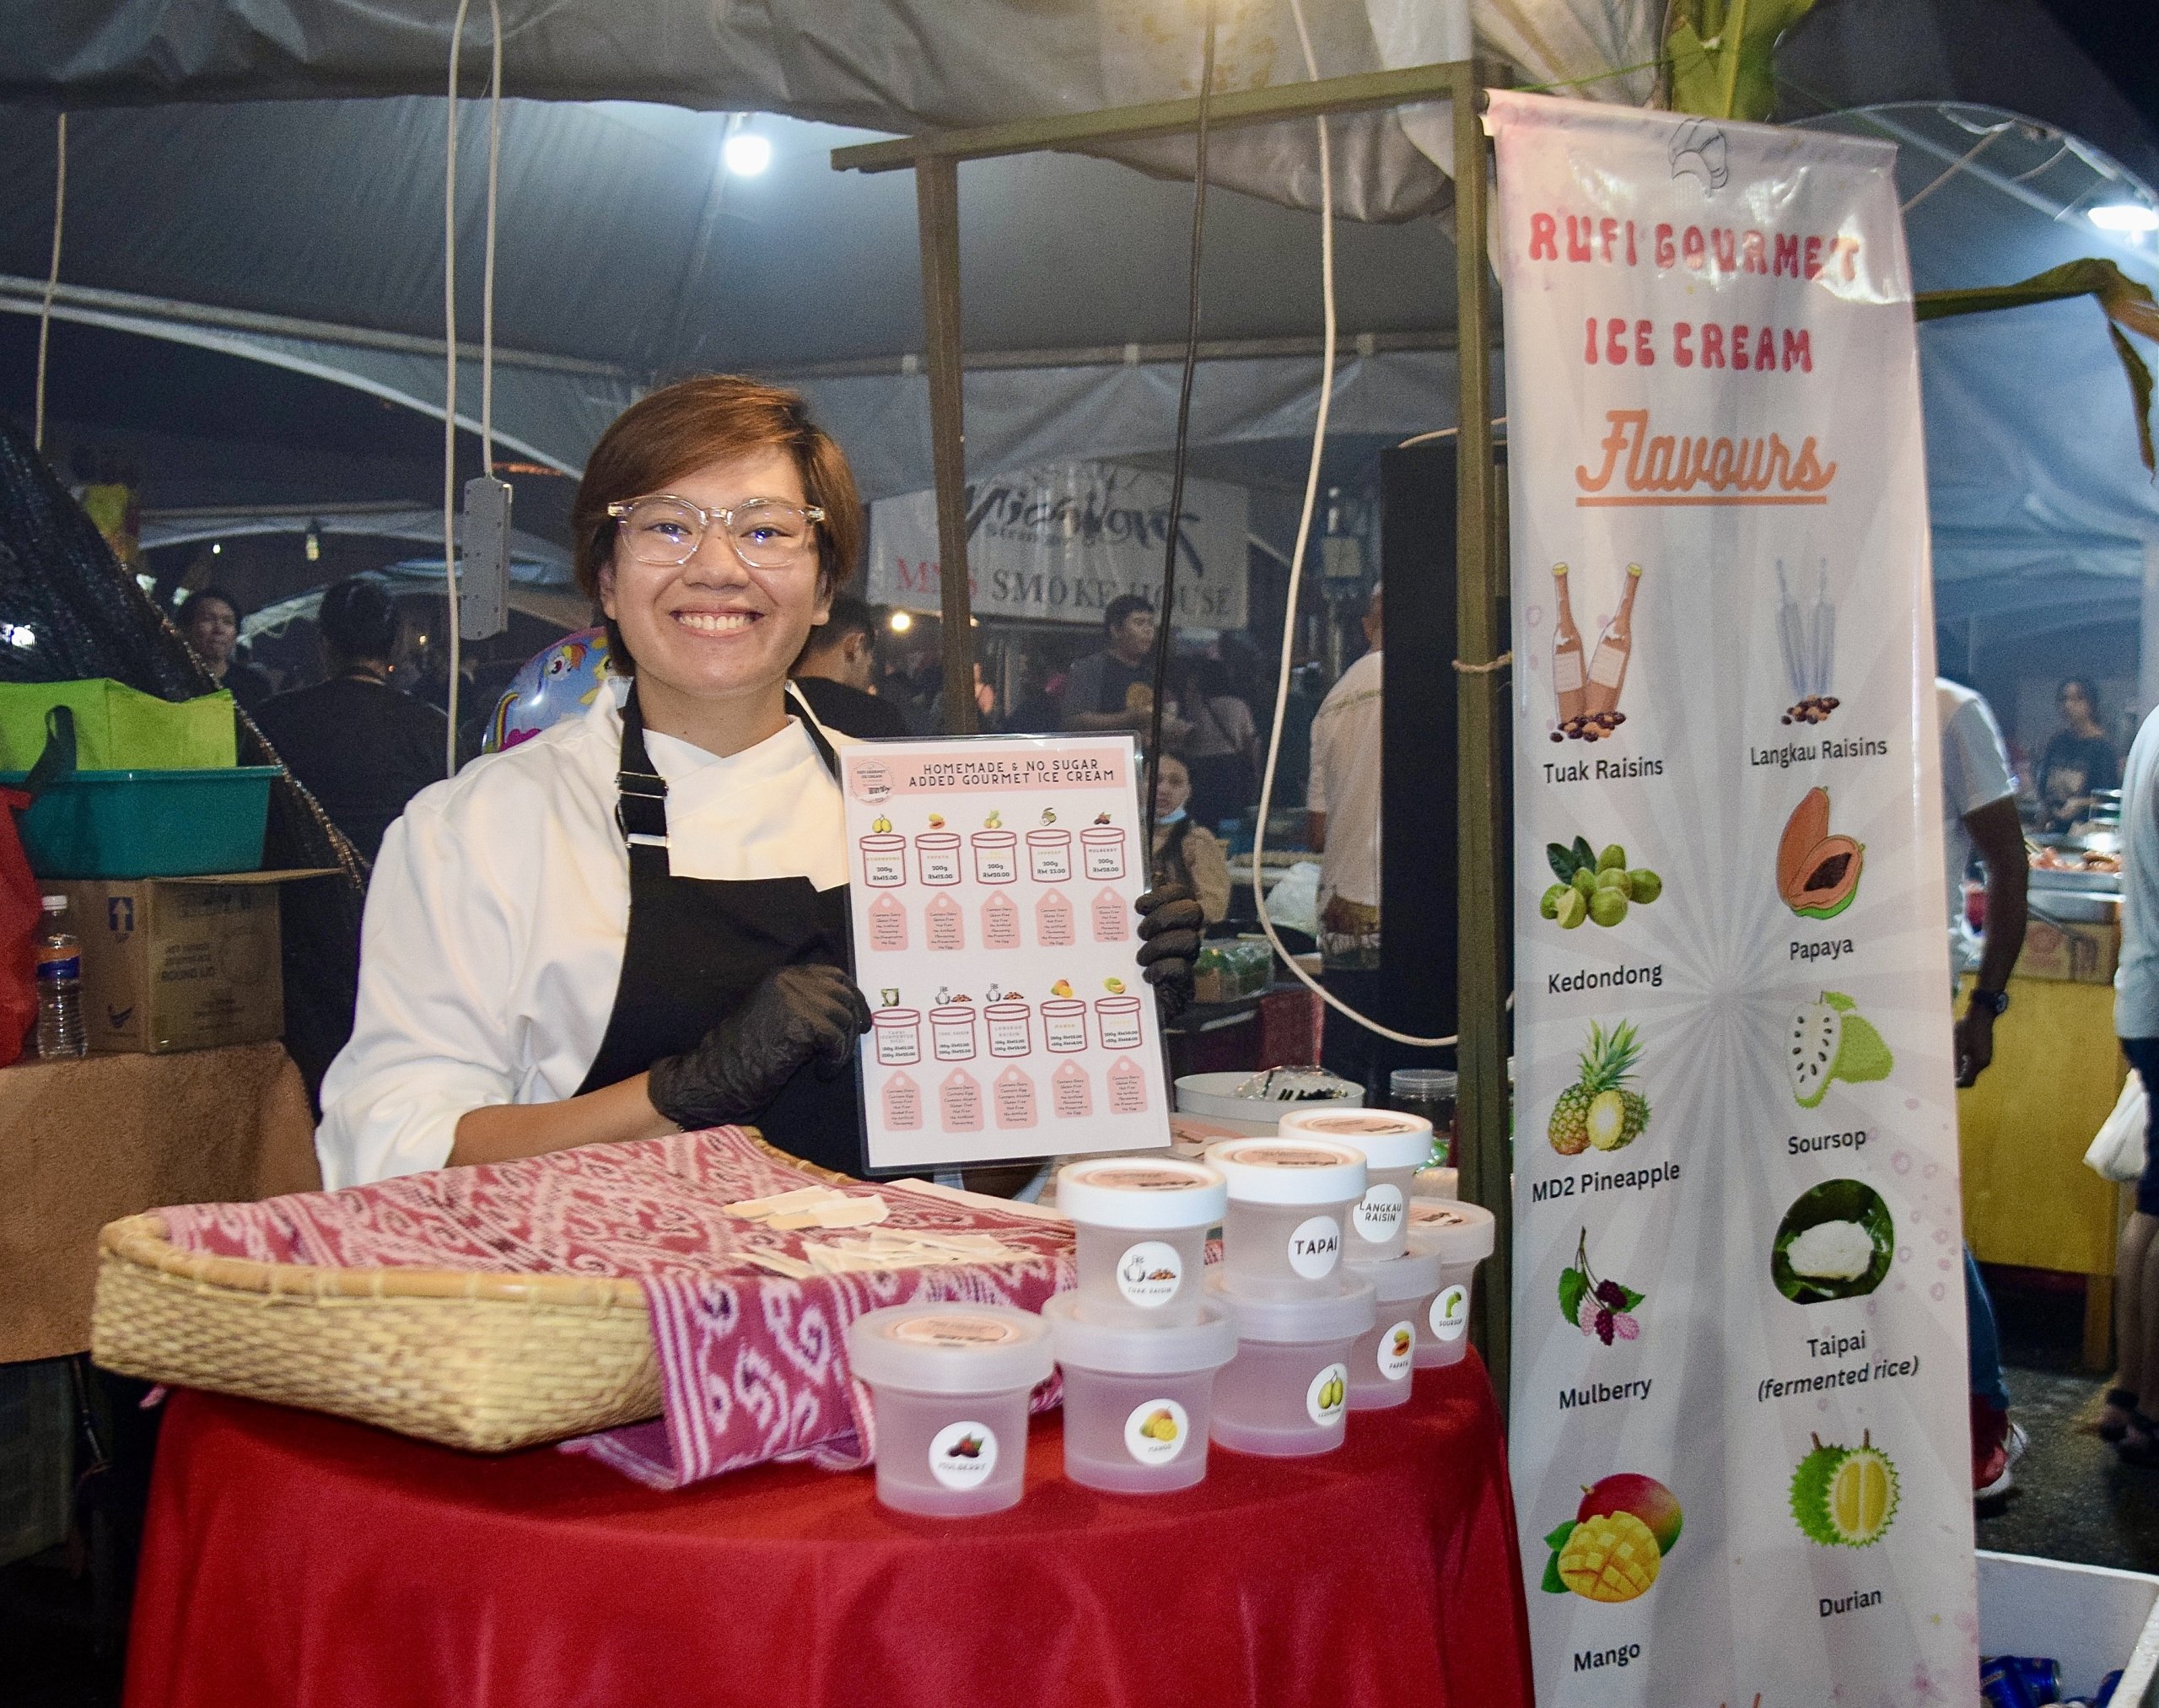 Langkau and tuak meet gourmet ice cream in creation by Kuching entrepreneur